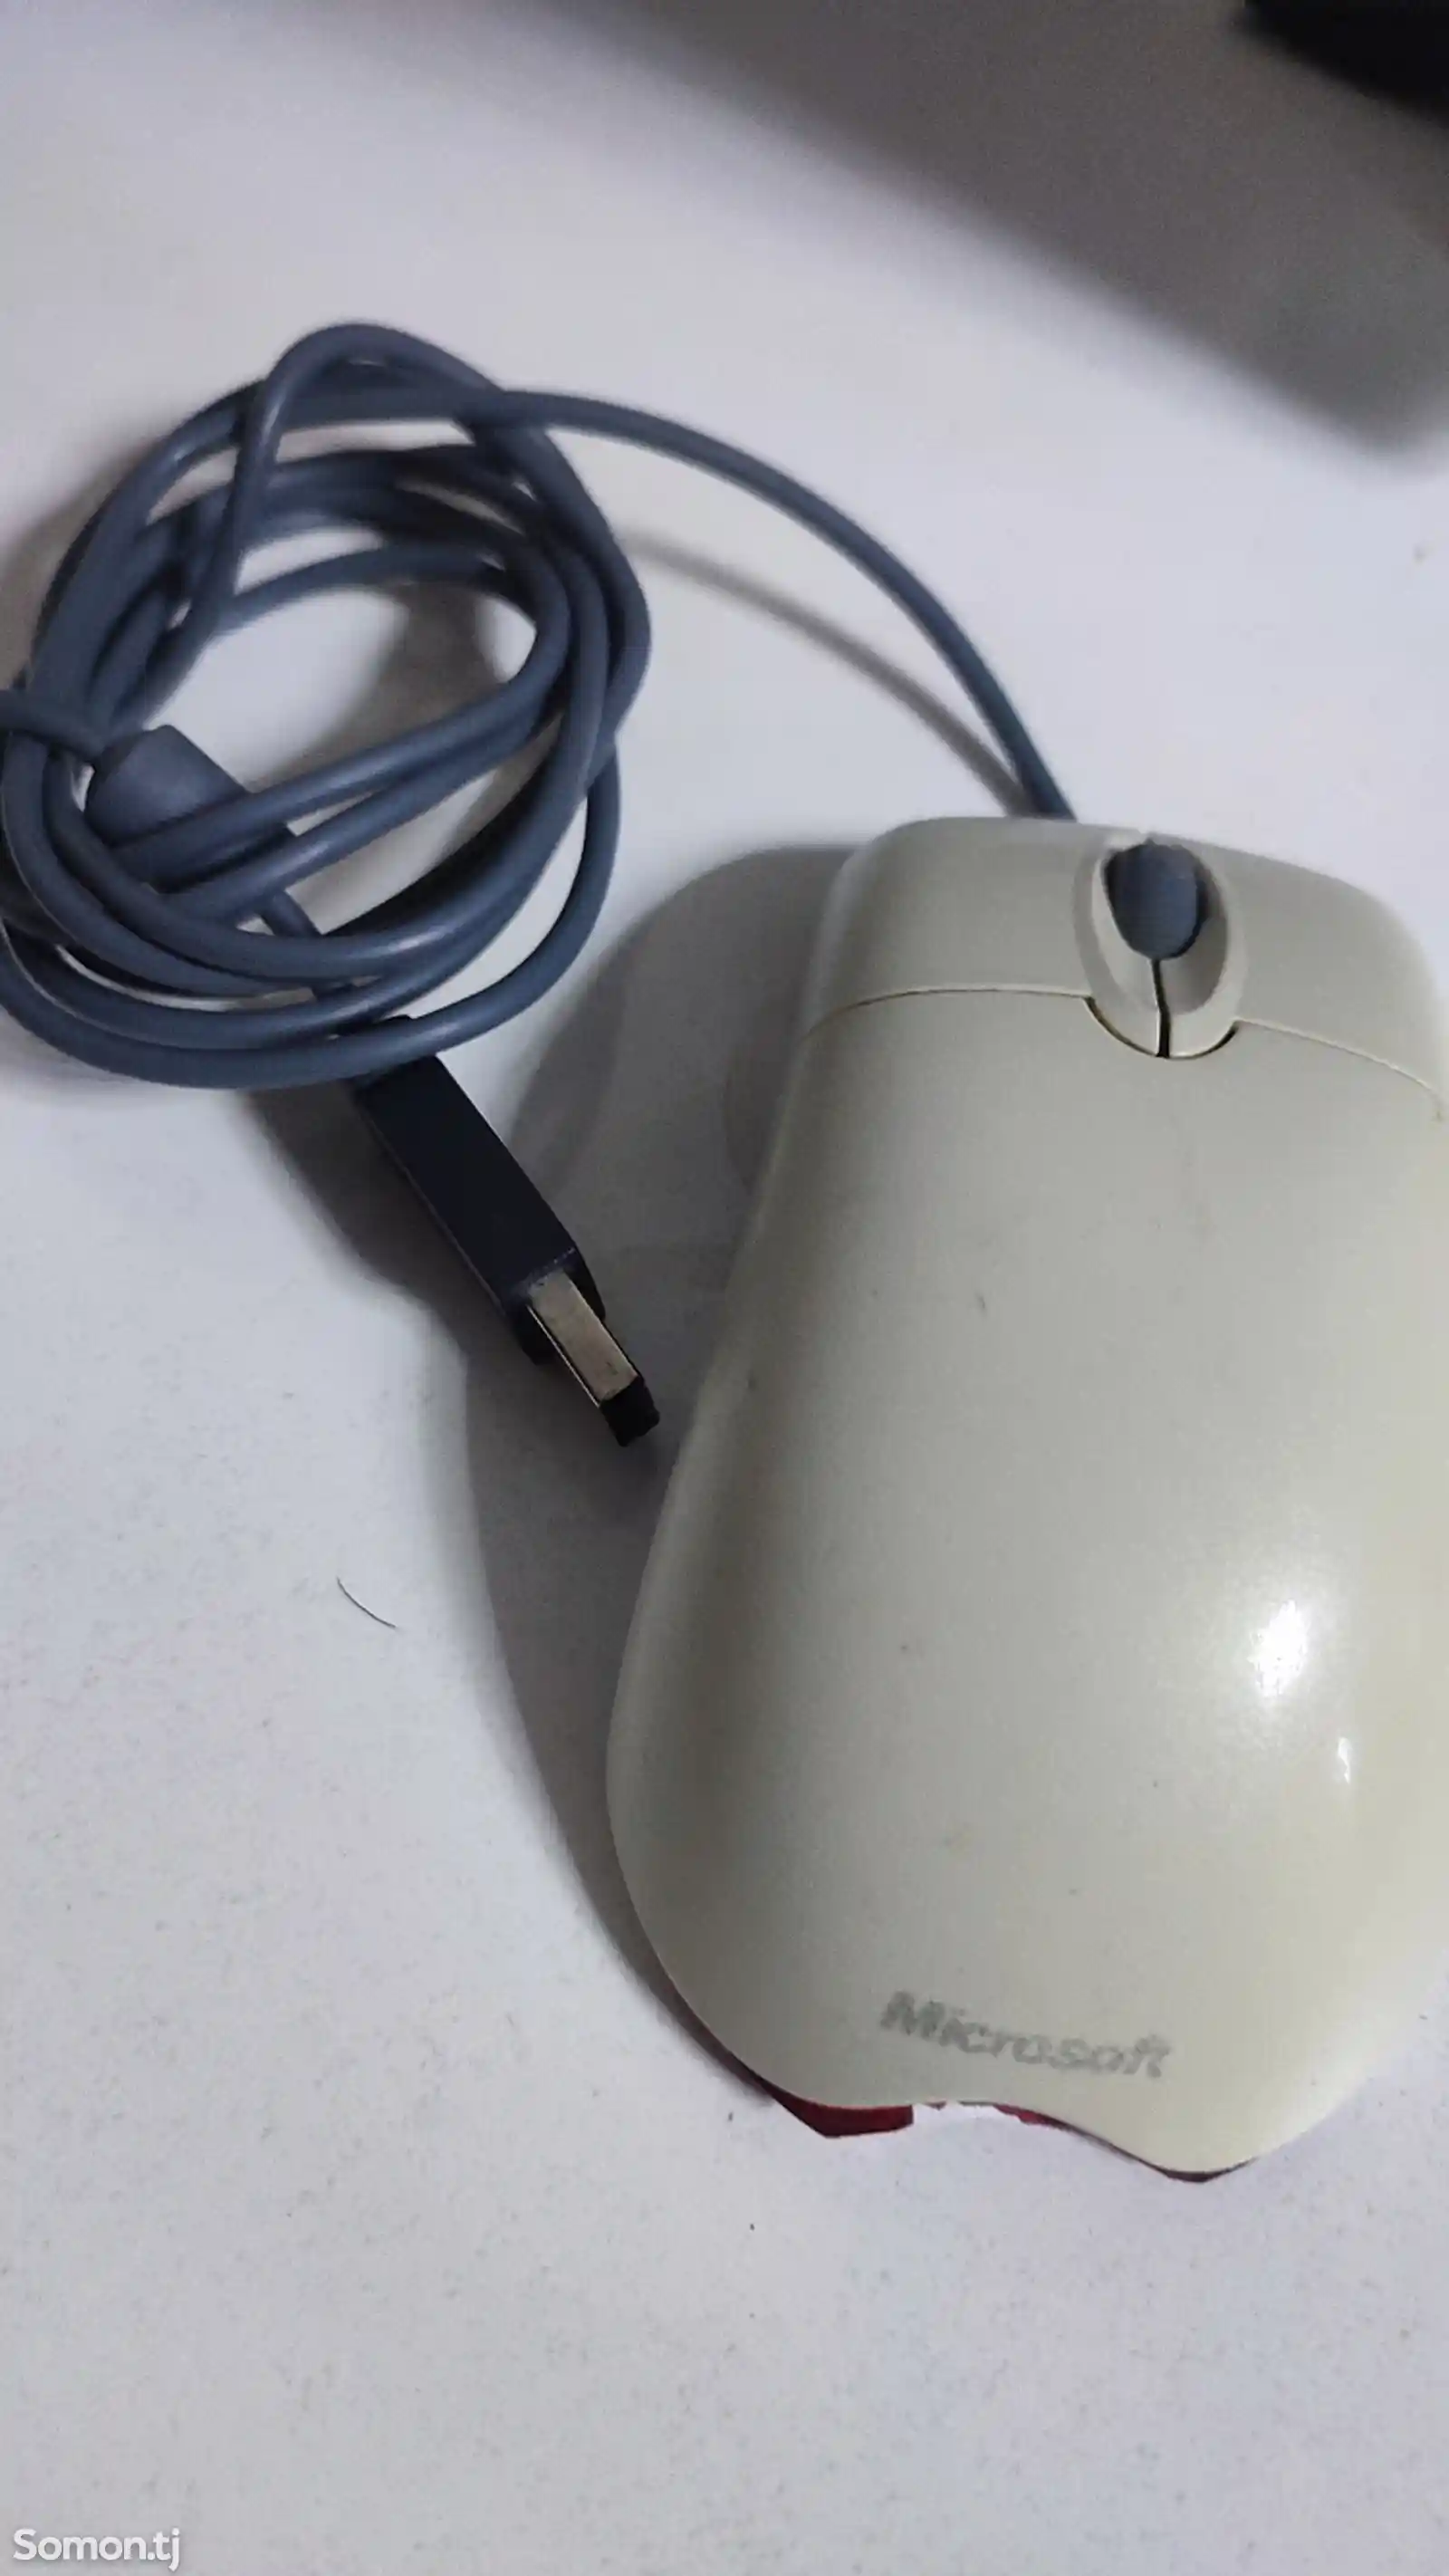 Мышь Microsoft-2